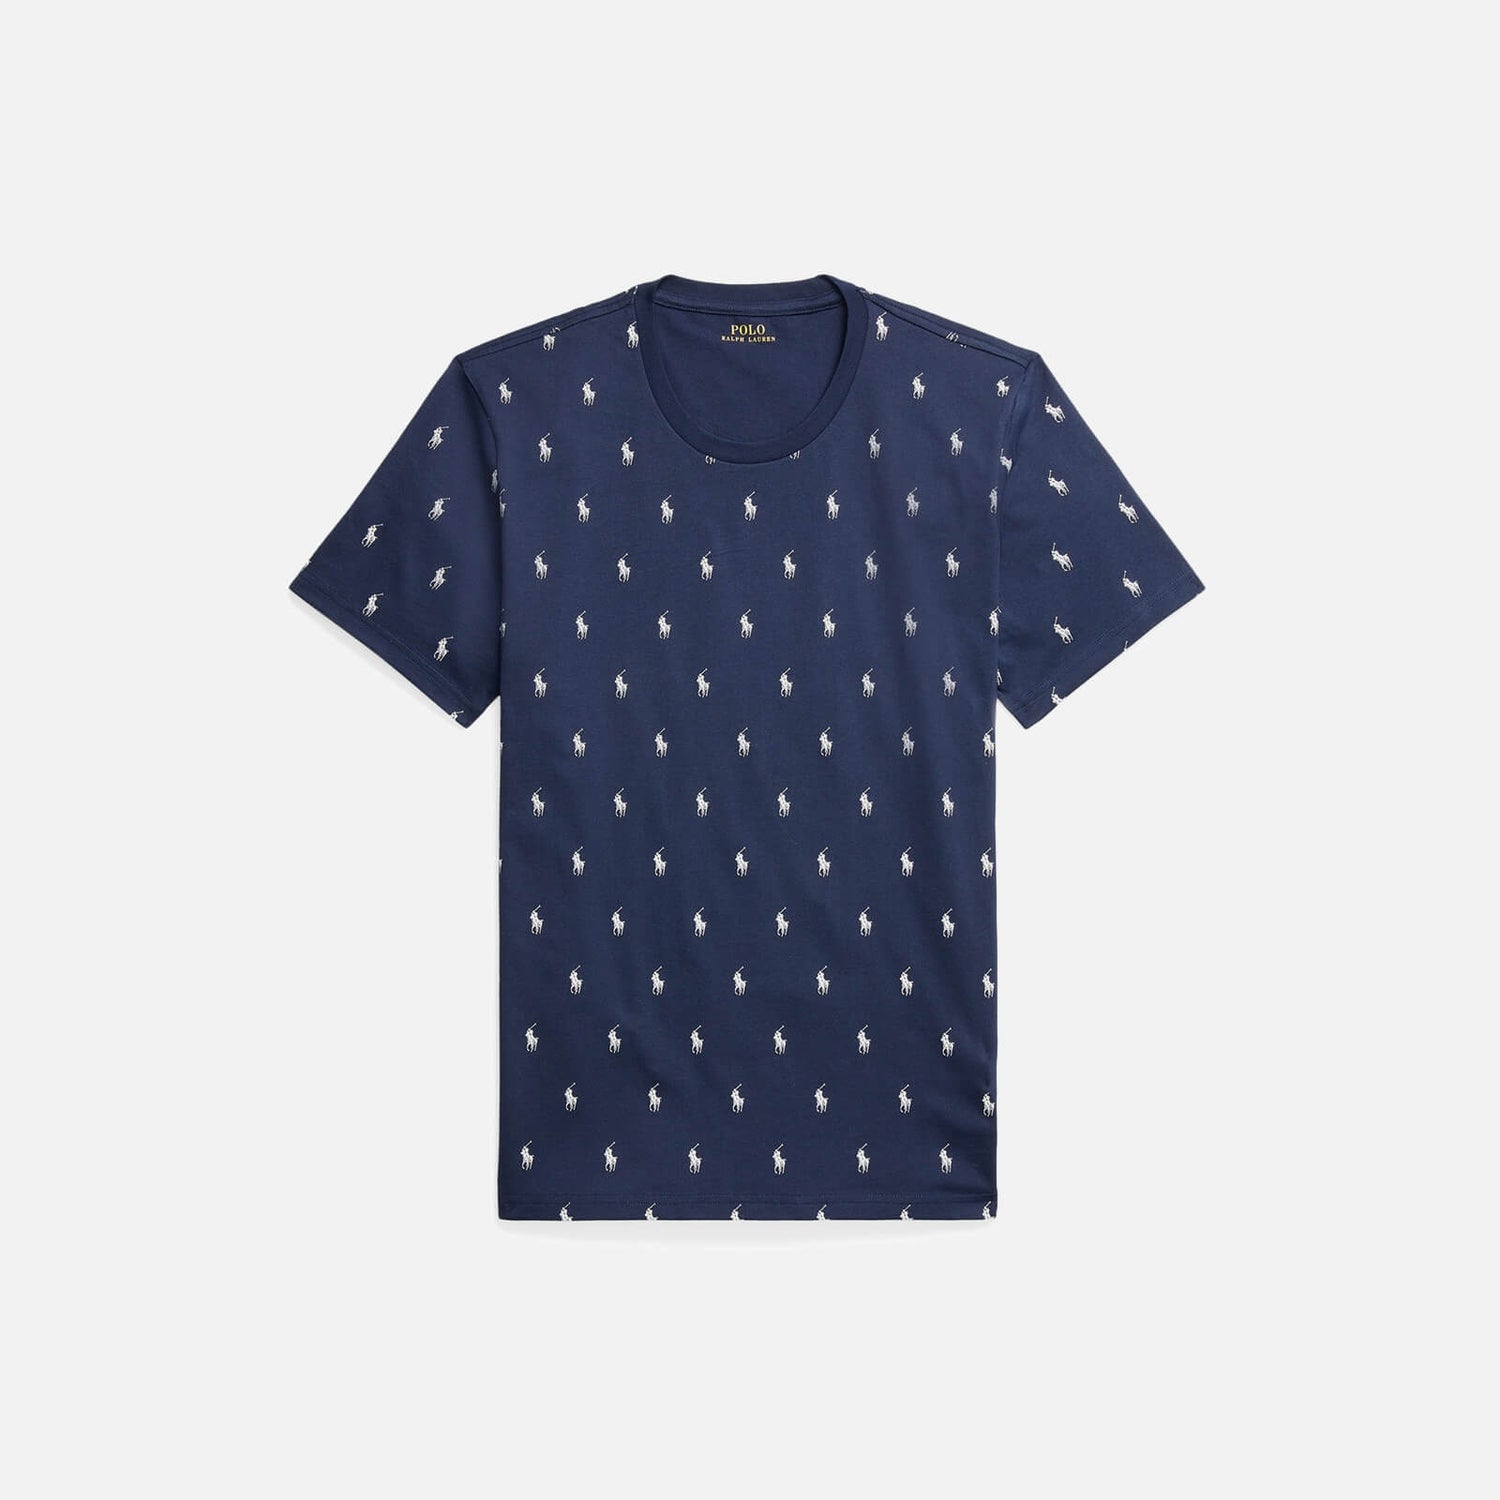 Polo Ralph Lauren Men's Liquid Cotton Printed Crewneck T-Shirt - Cruise Navy - L